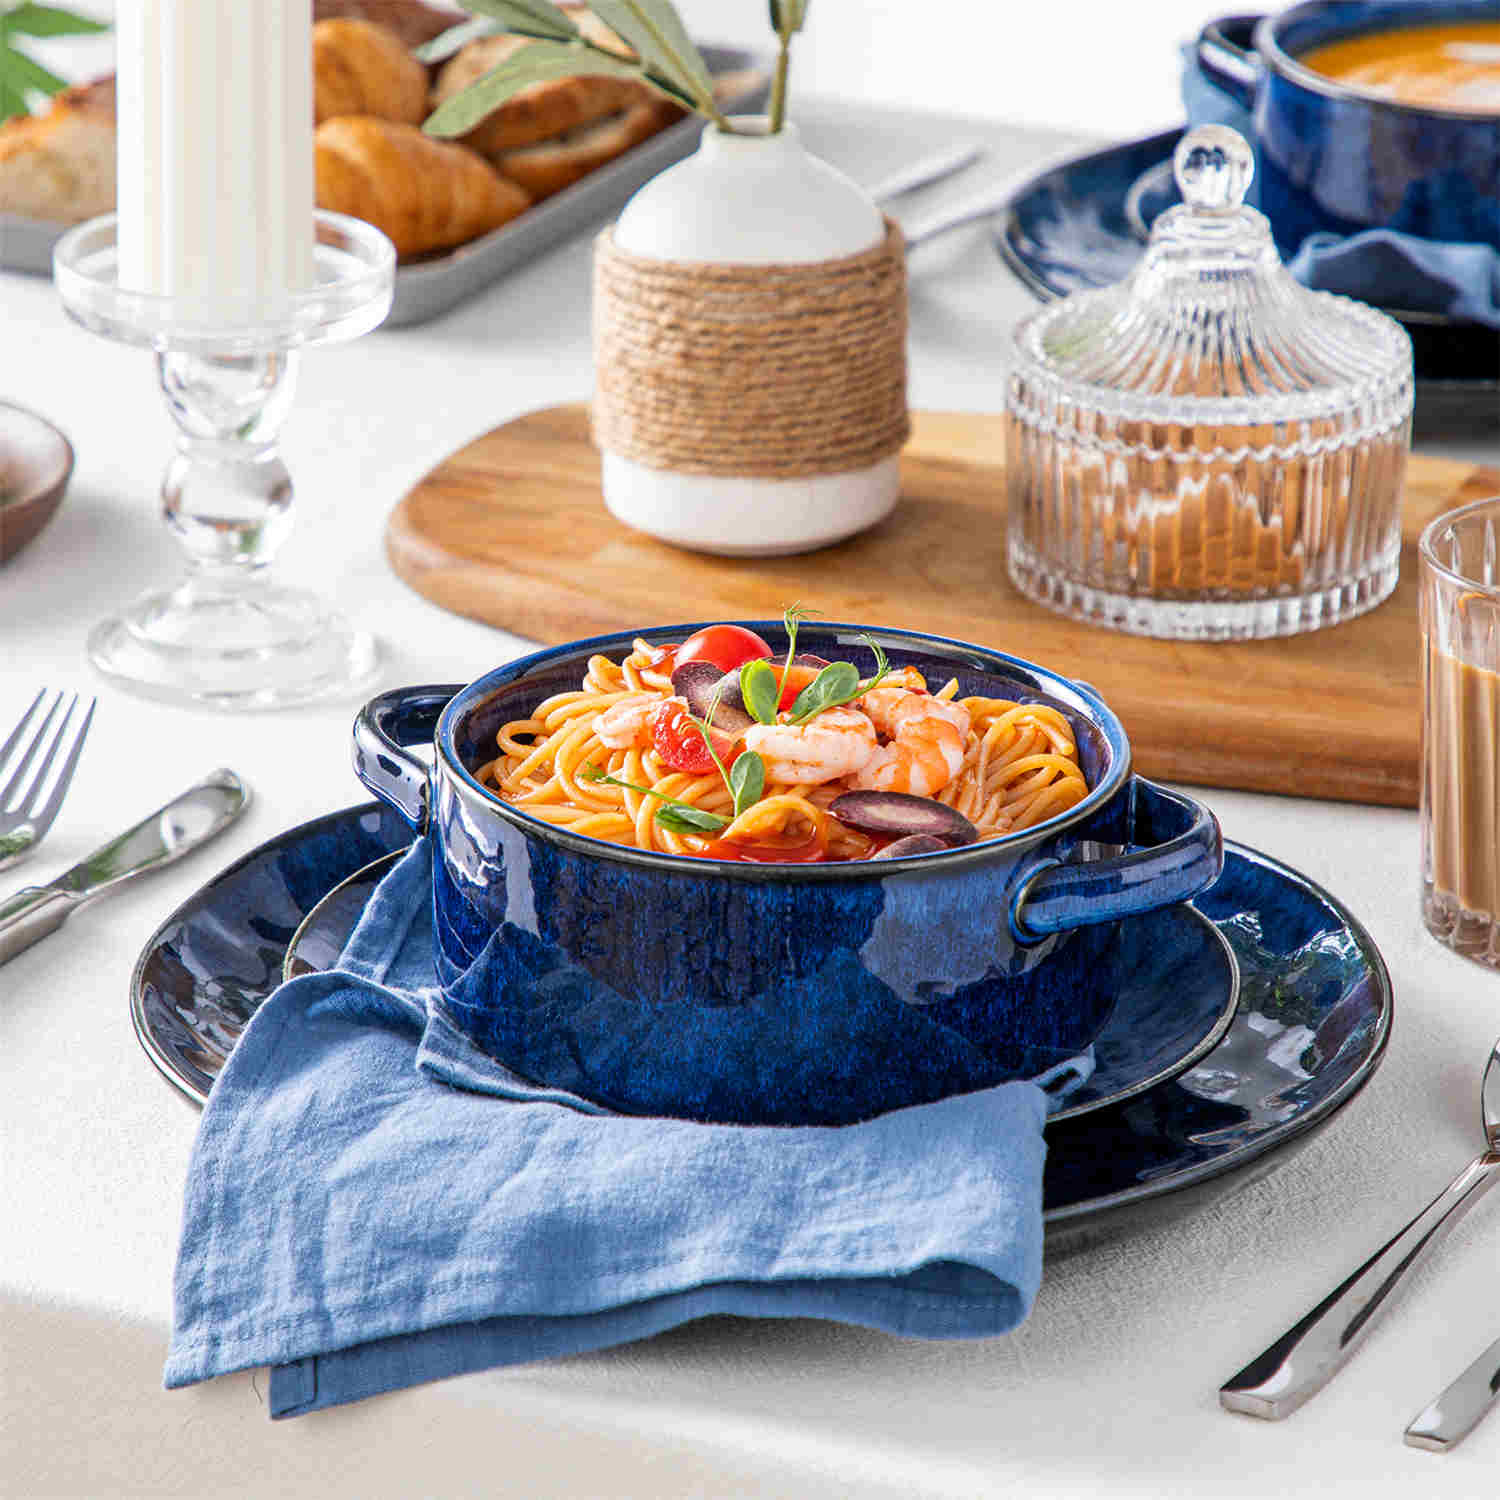 Reactive Glaze Starry Blue Handled Soup Bowls Set of 4-vancasso